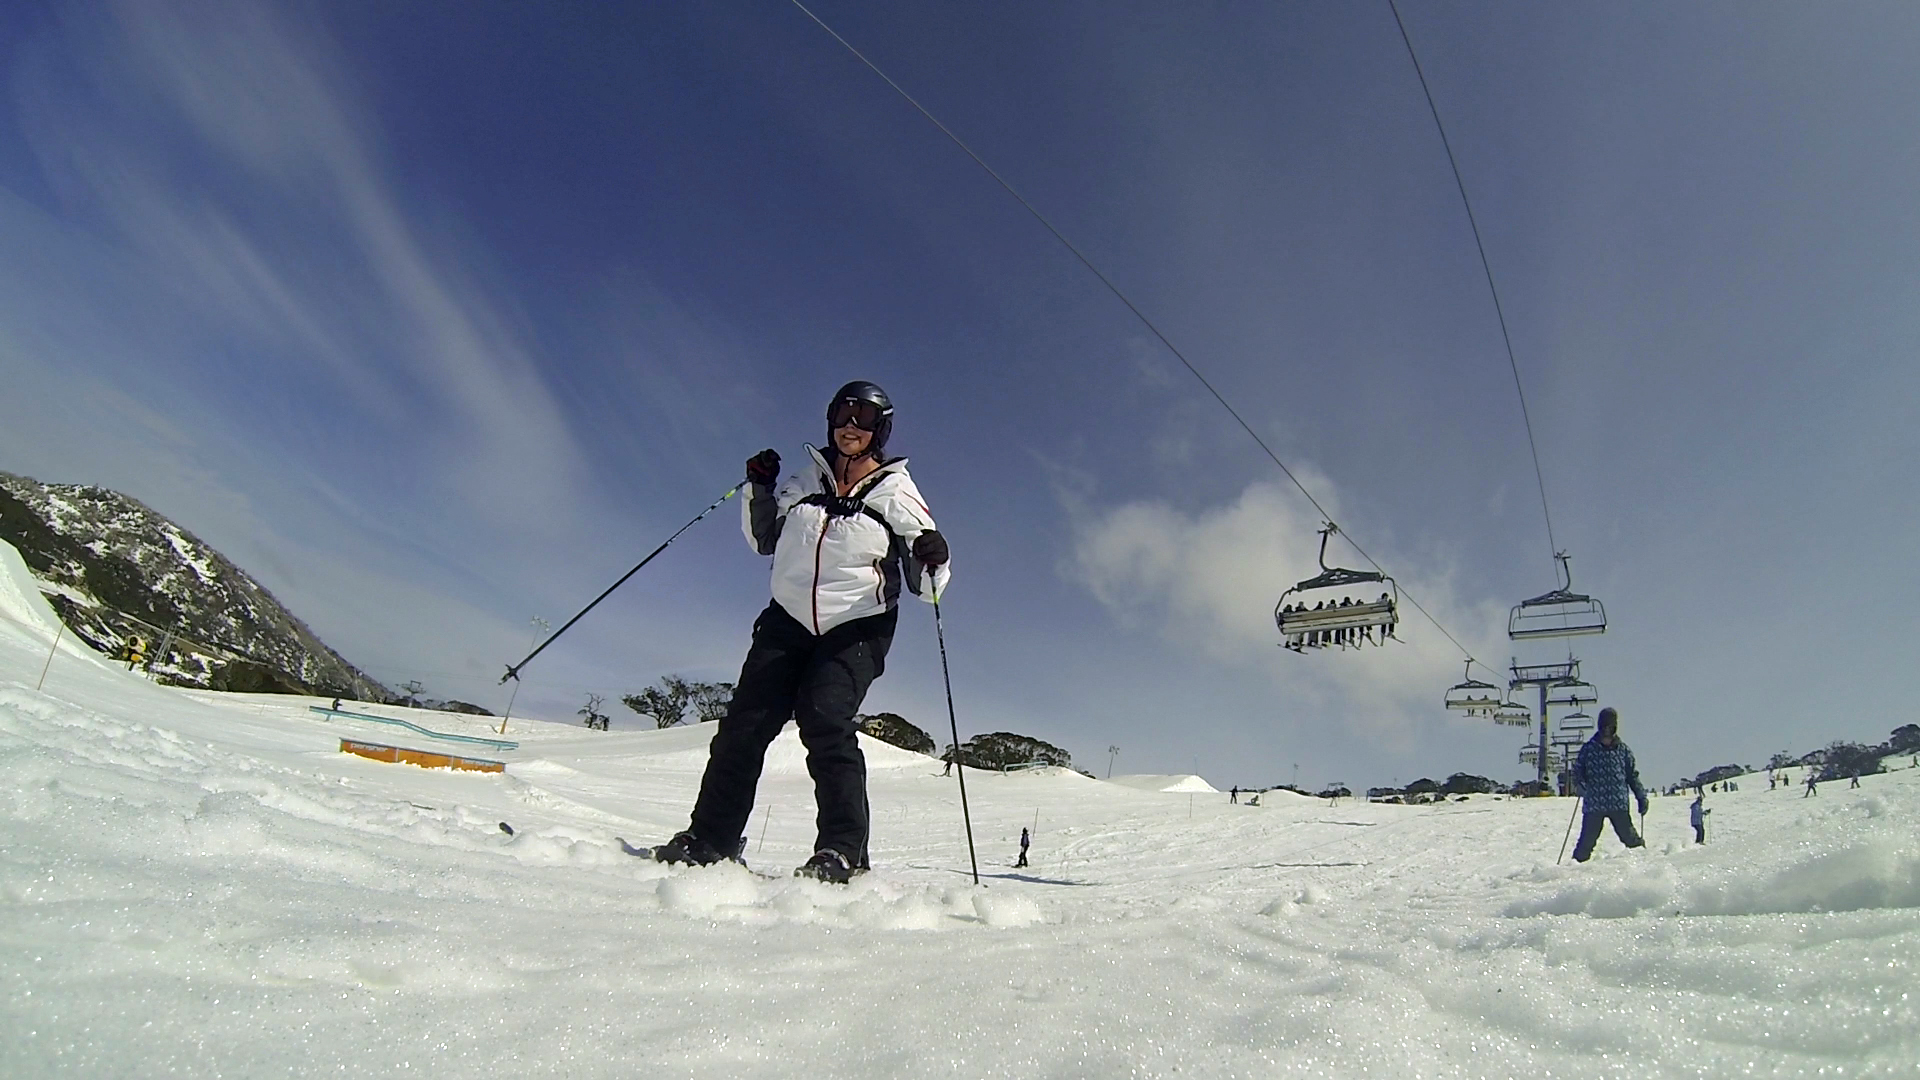 Rowena skiing downhill Fri